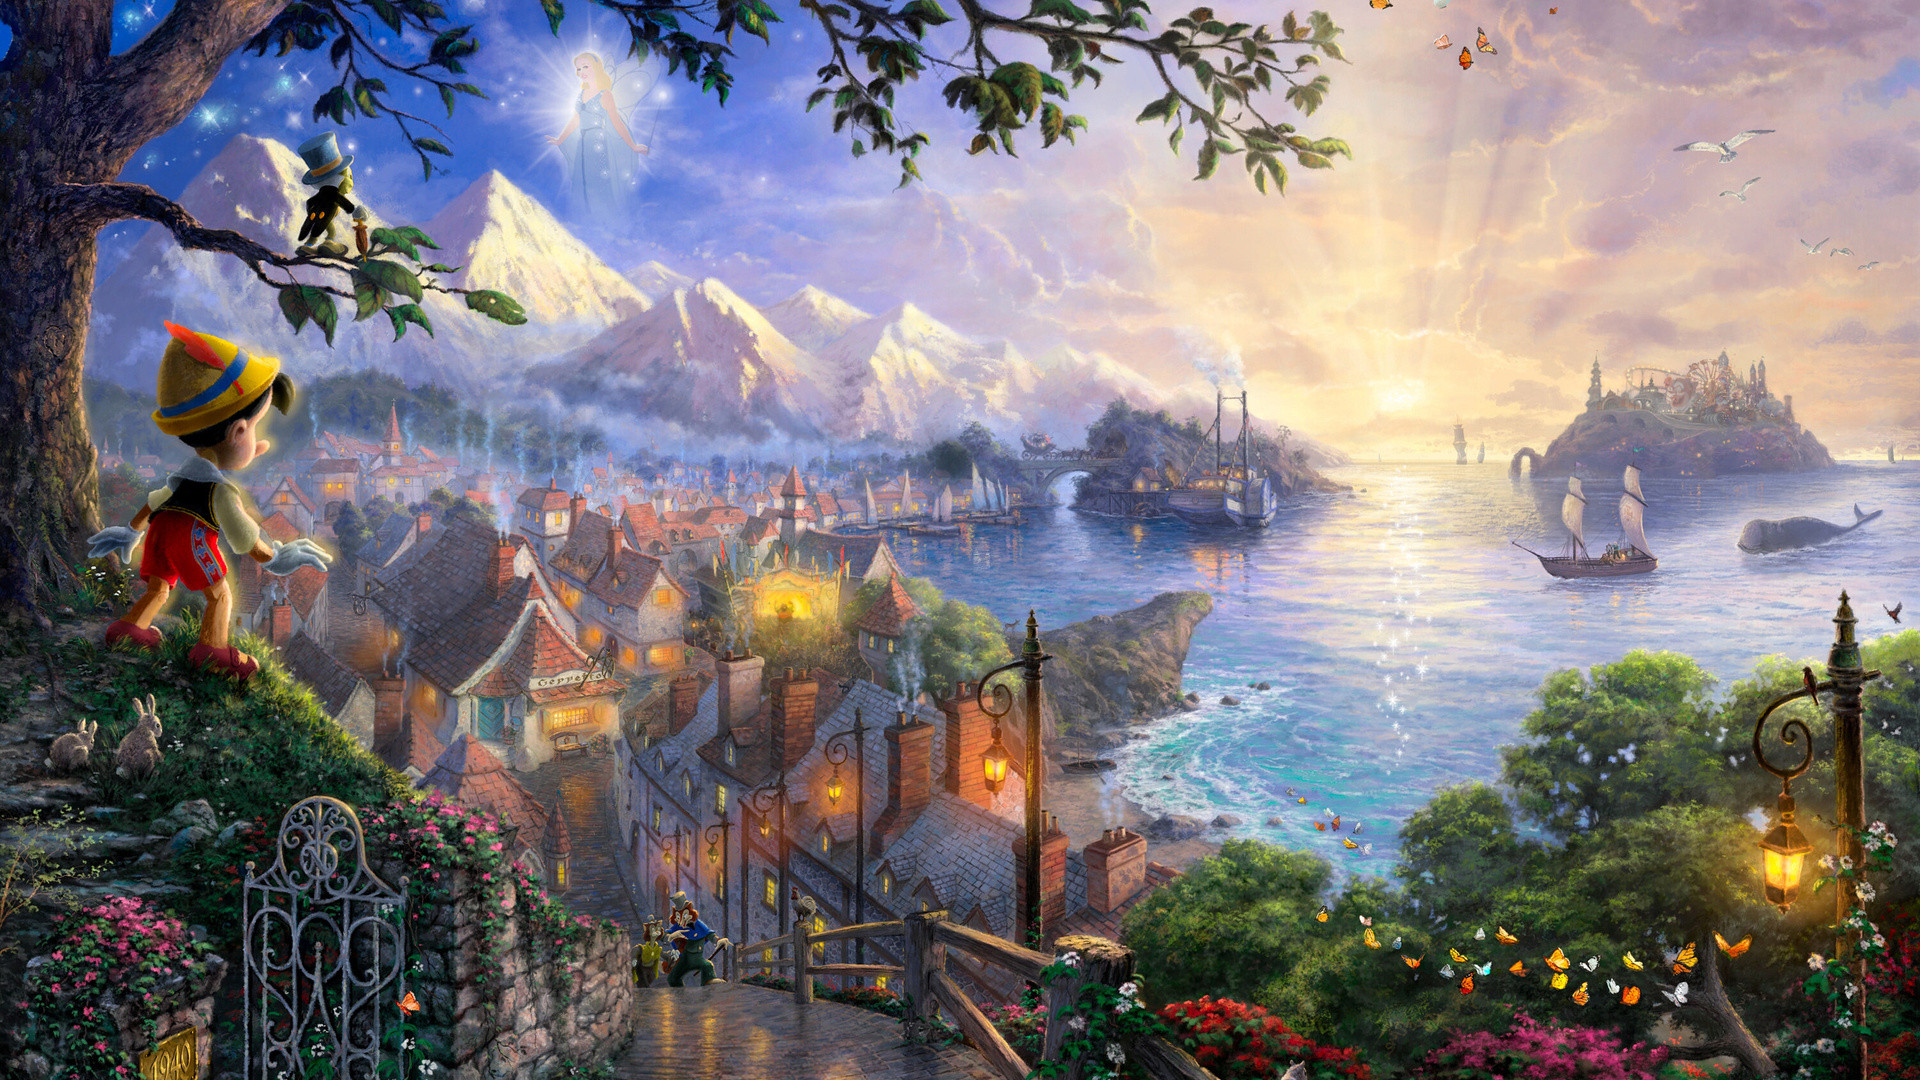 Disney Dream Wallpapers